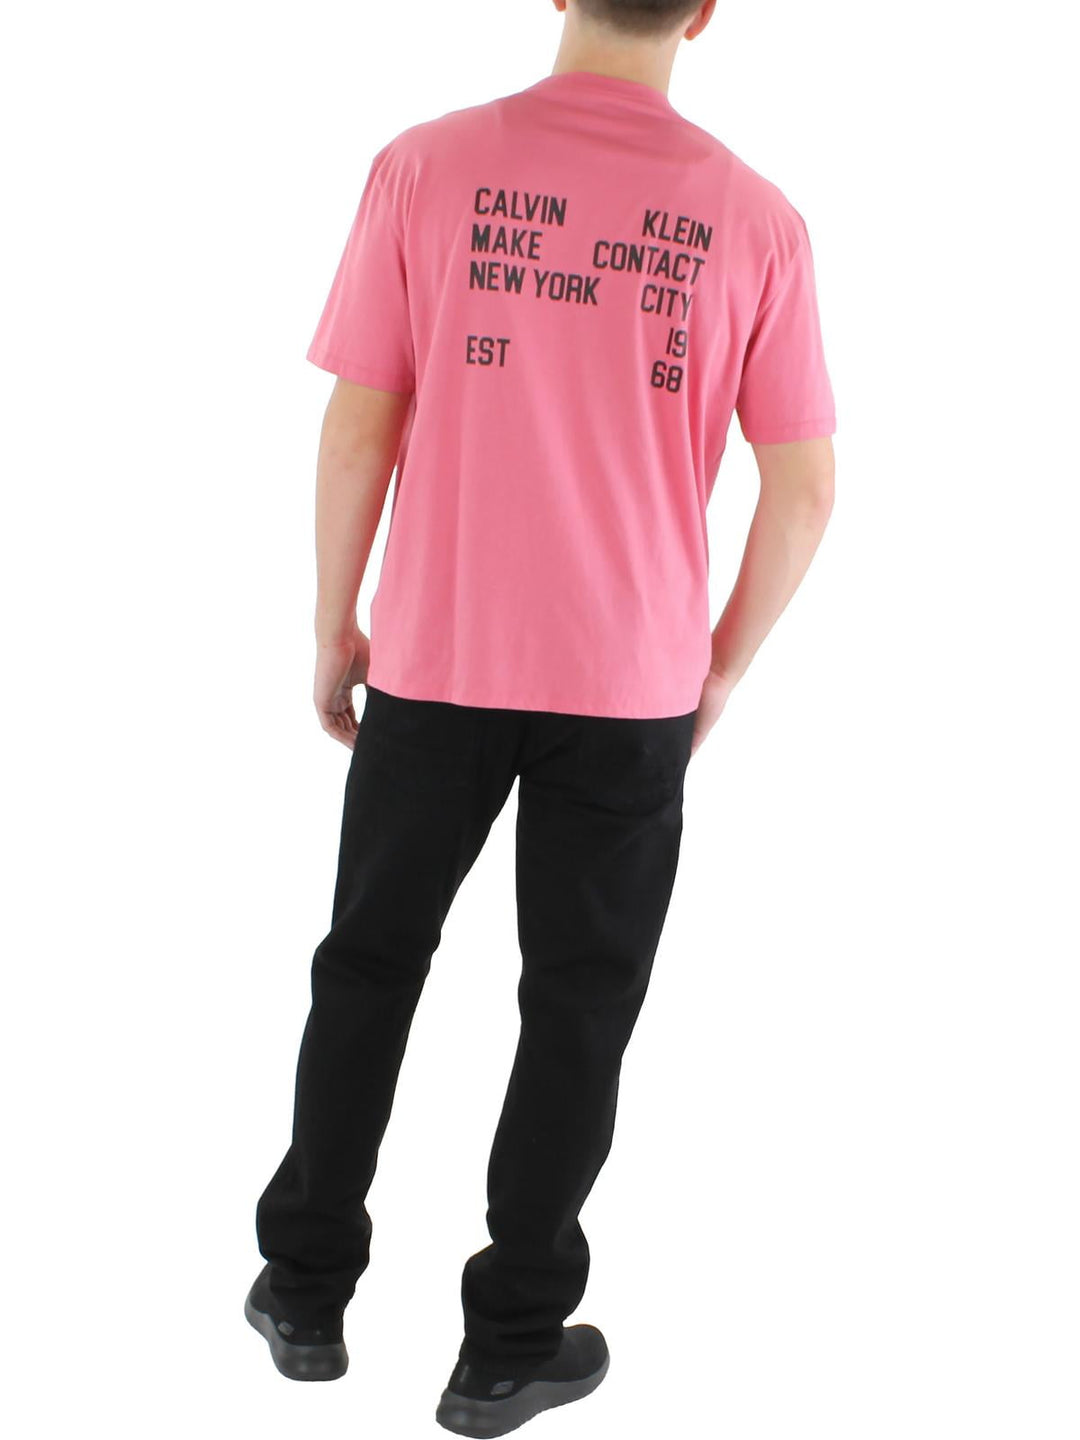 Calvin Klein Men's Graphic Crewneck Graphic T-Shirt Pink Size Small